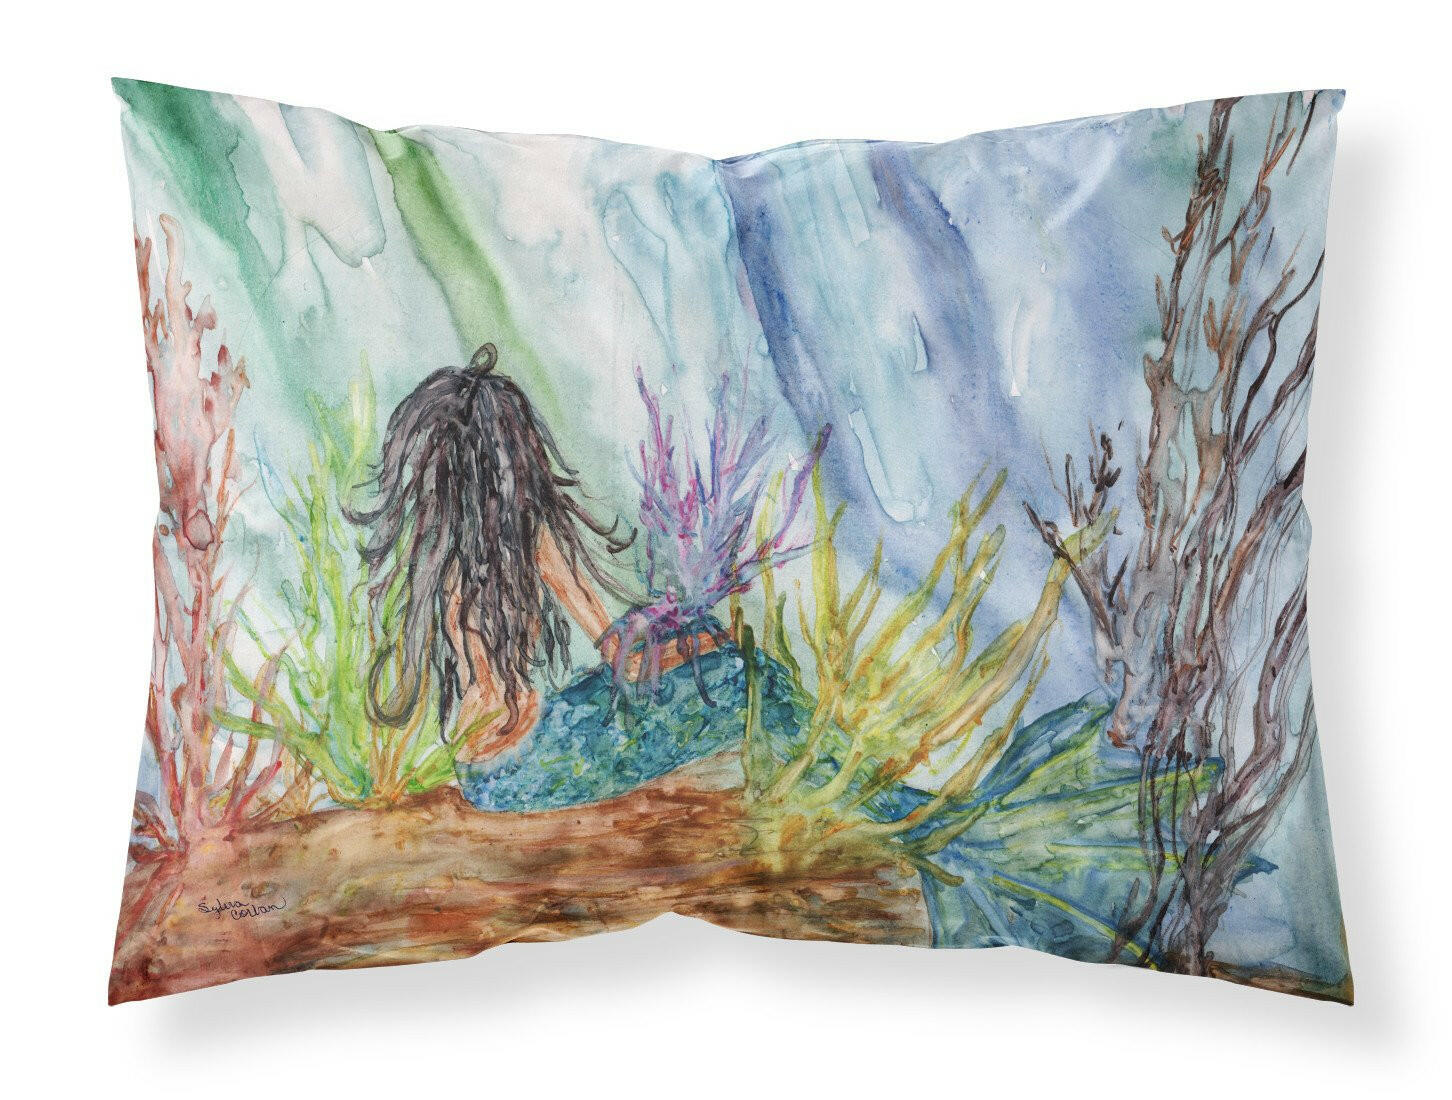 Black Haired Mermaid Water Fantasy Fabric Standard Pillowcase 8974PILLOWCASE by Caroline's Treasures